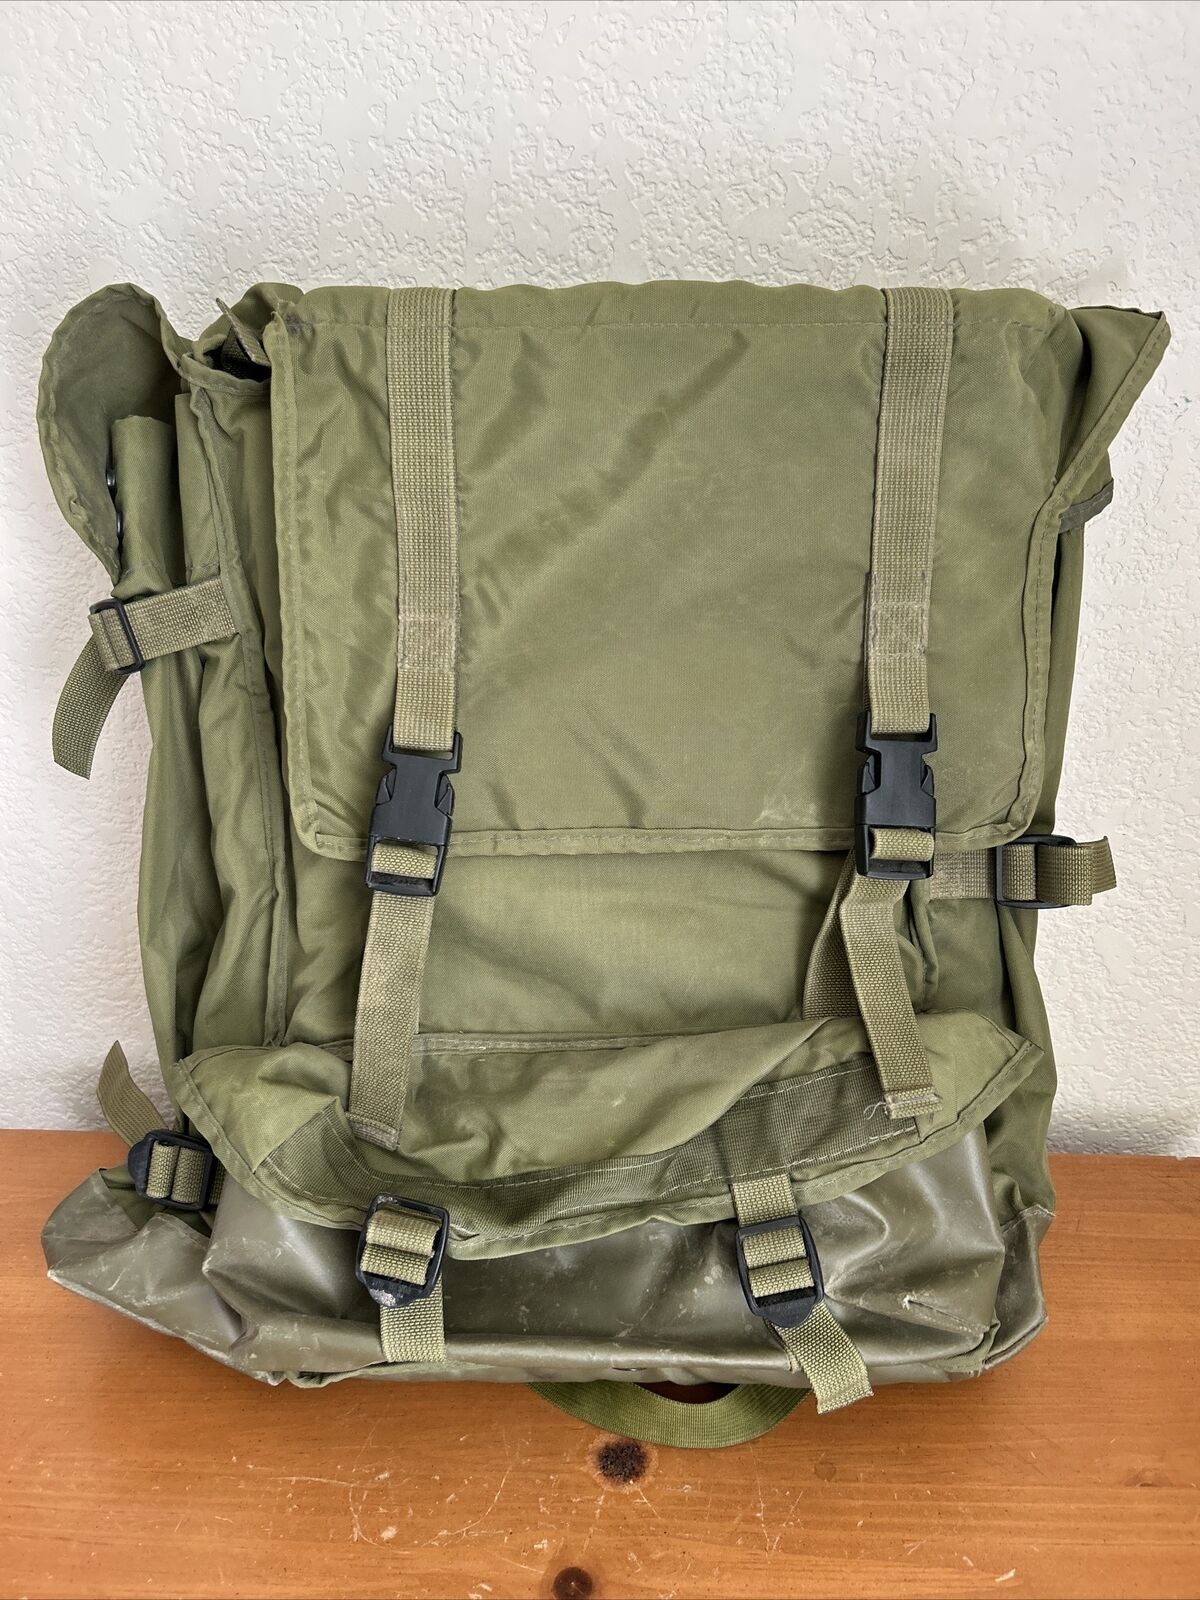 GI US Military Army Surplus Harris Falcon II Radio Pack PRC 150 Padded Backpack